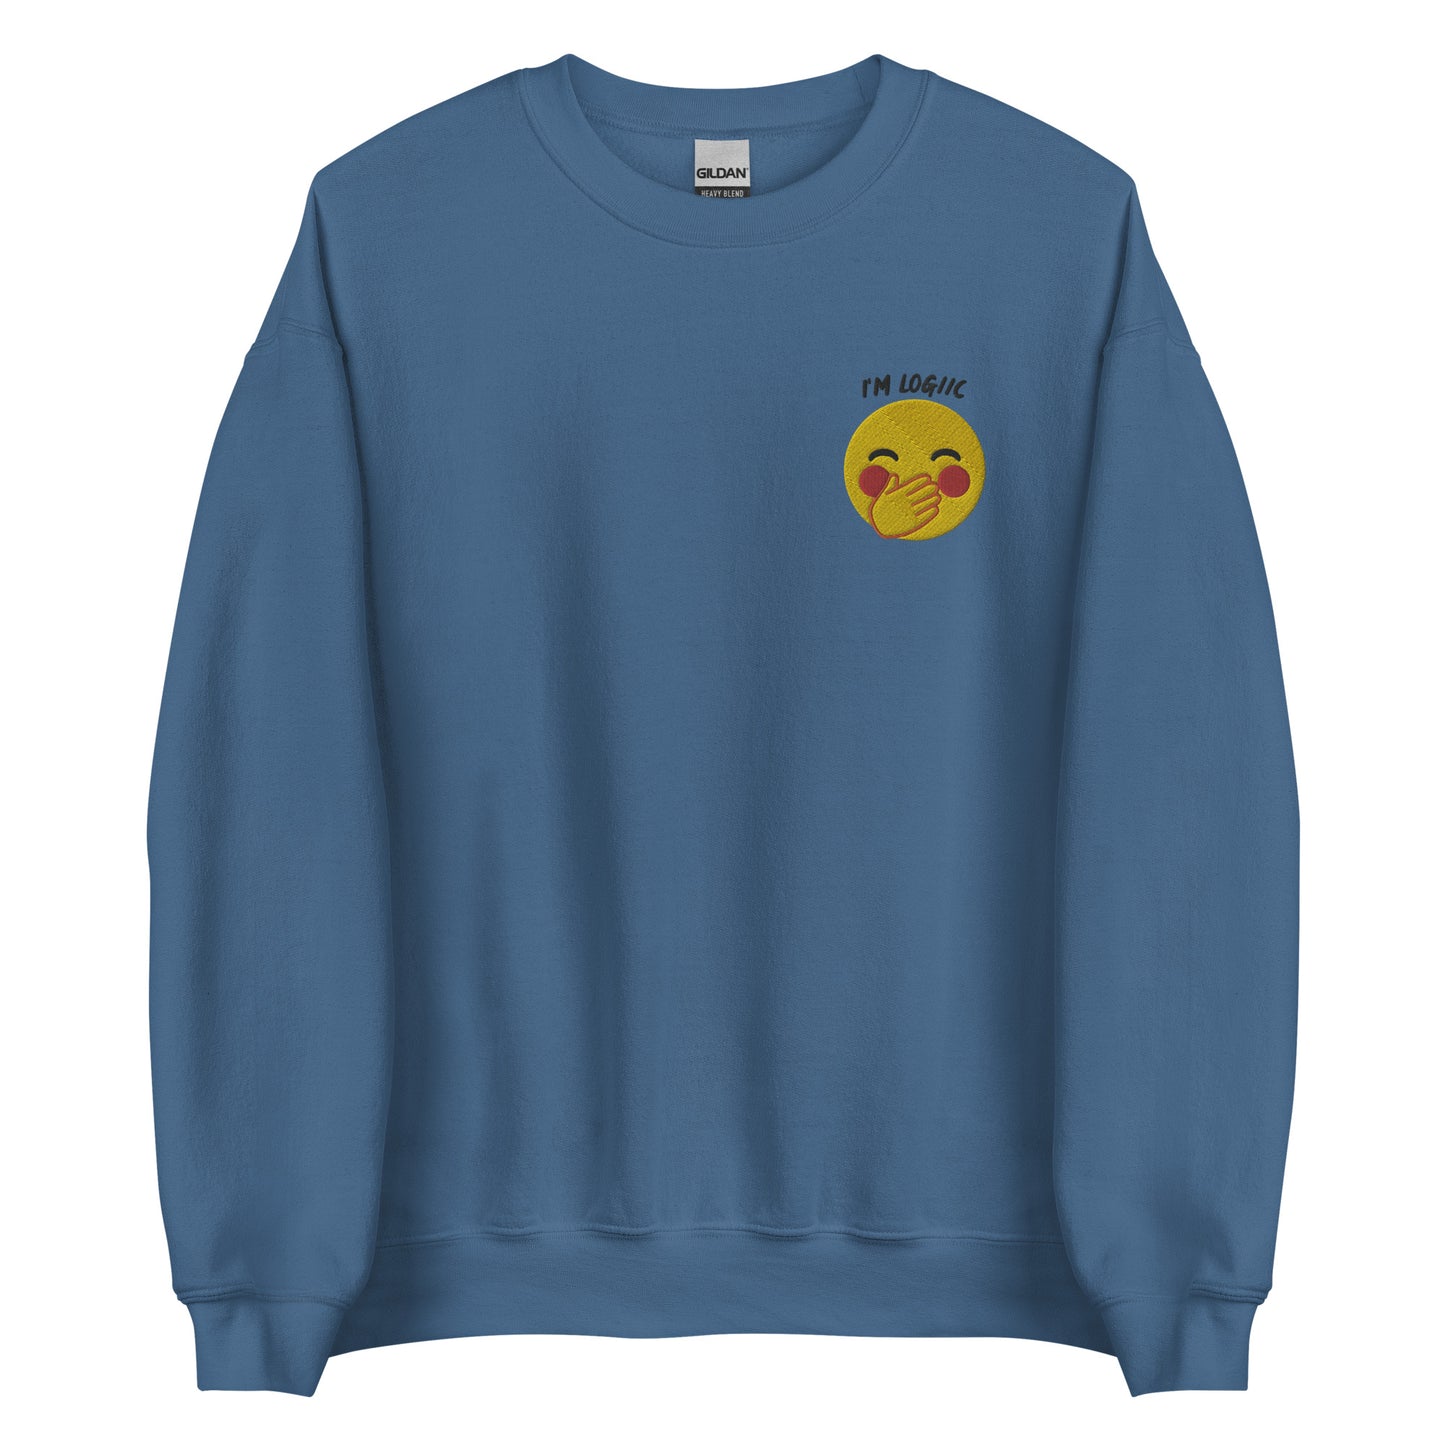 Giggle Emoji Unisex Sweatshirt - Indigo Blue / S